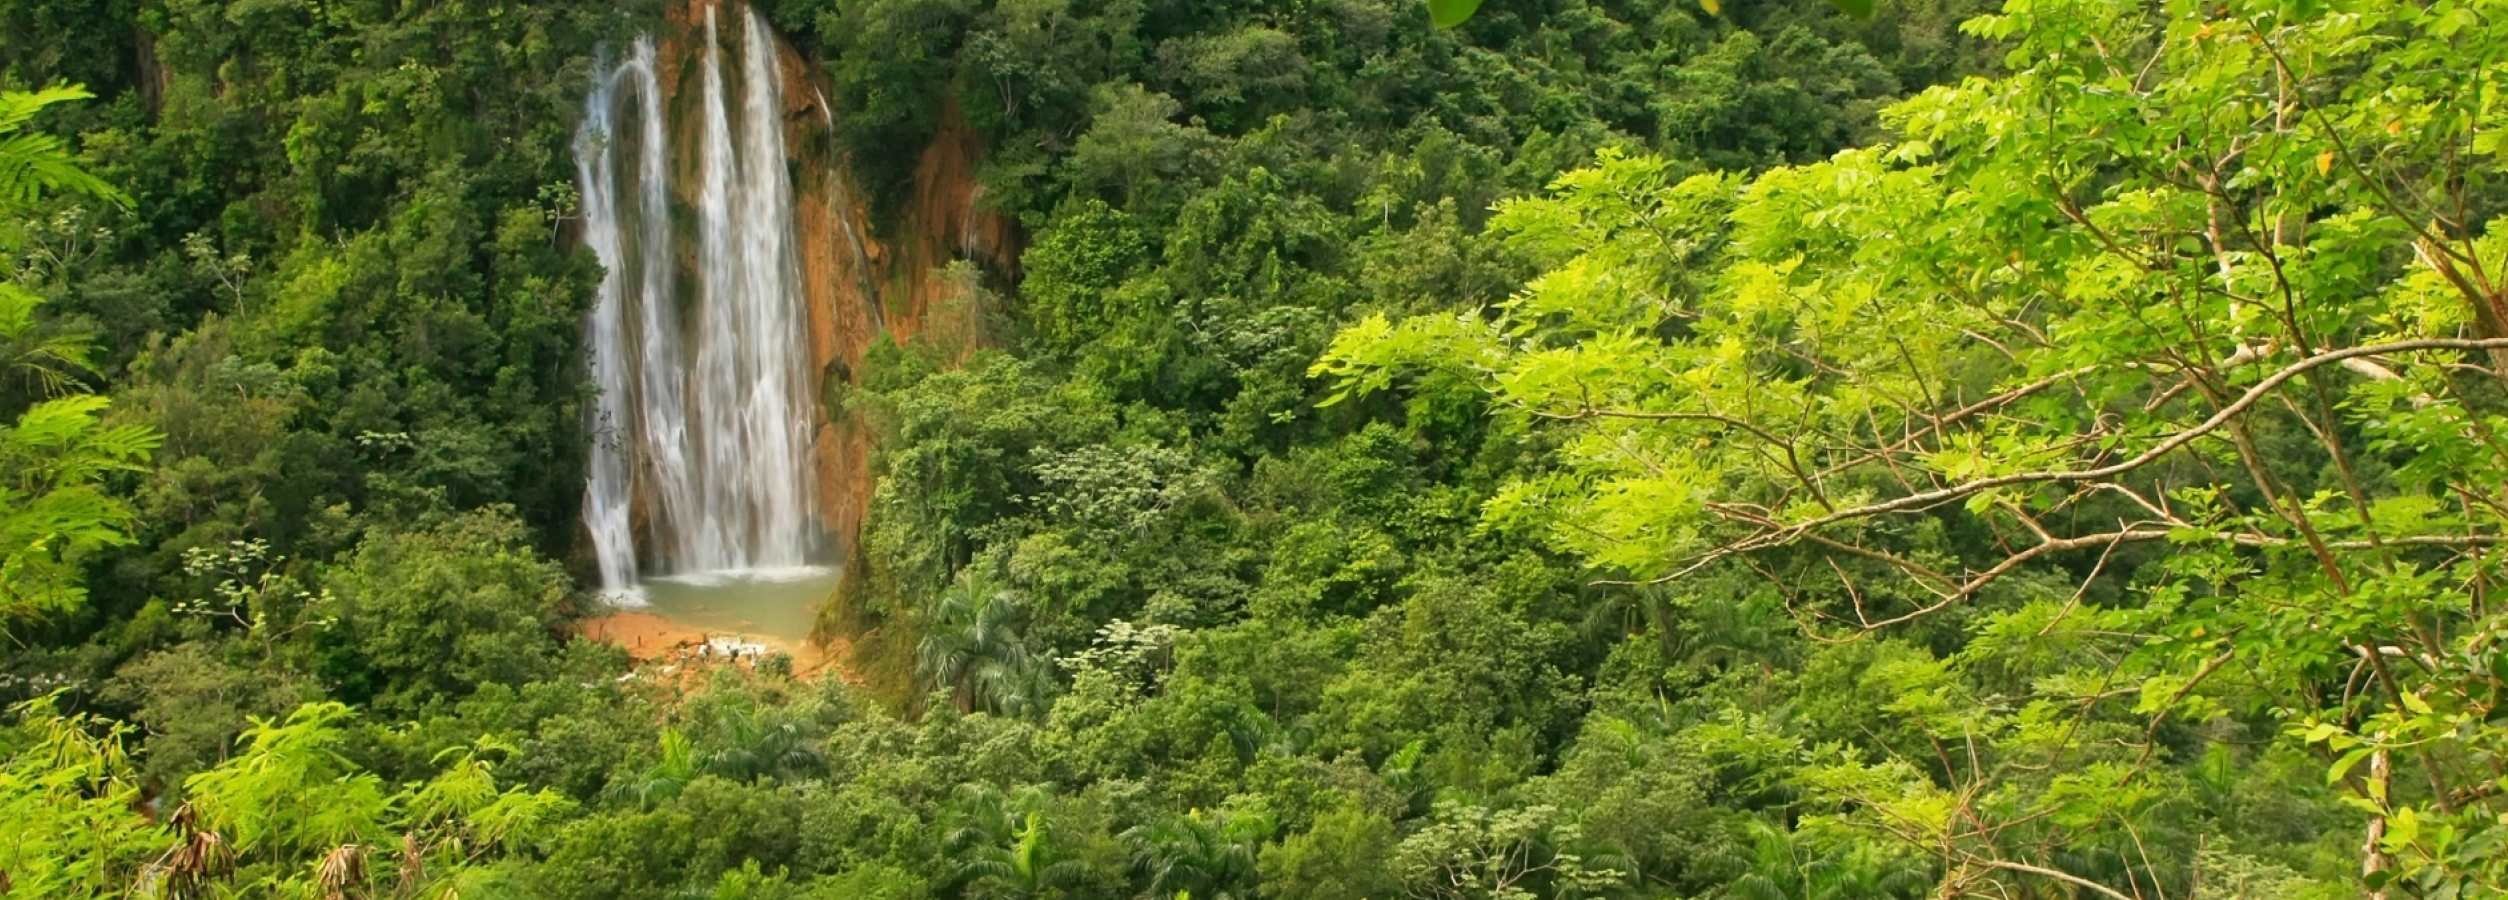 Los Haitises National Park: a journey through ecosystems